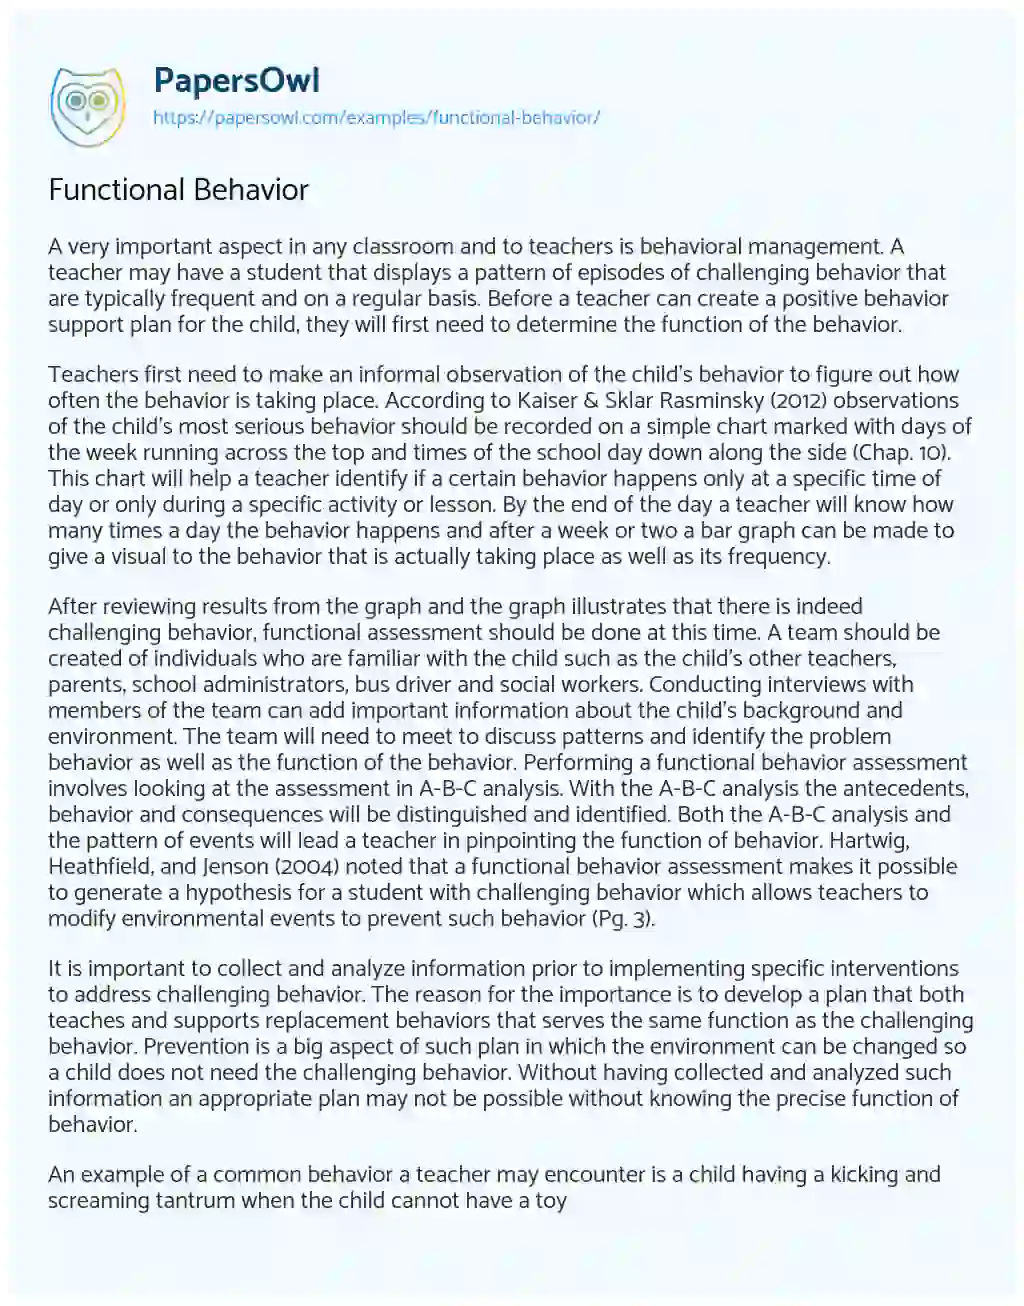 Essay on Functional Behavior